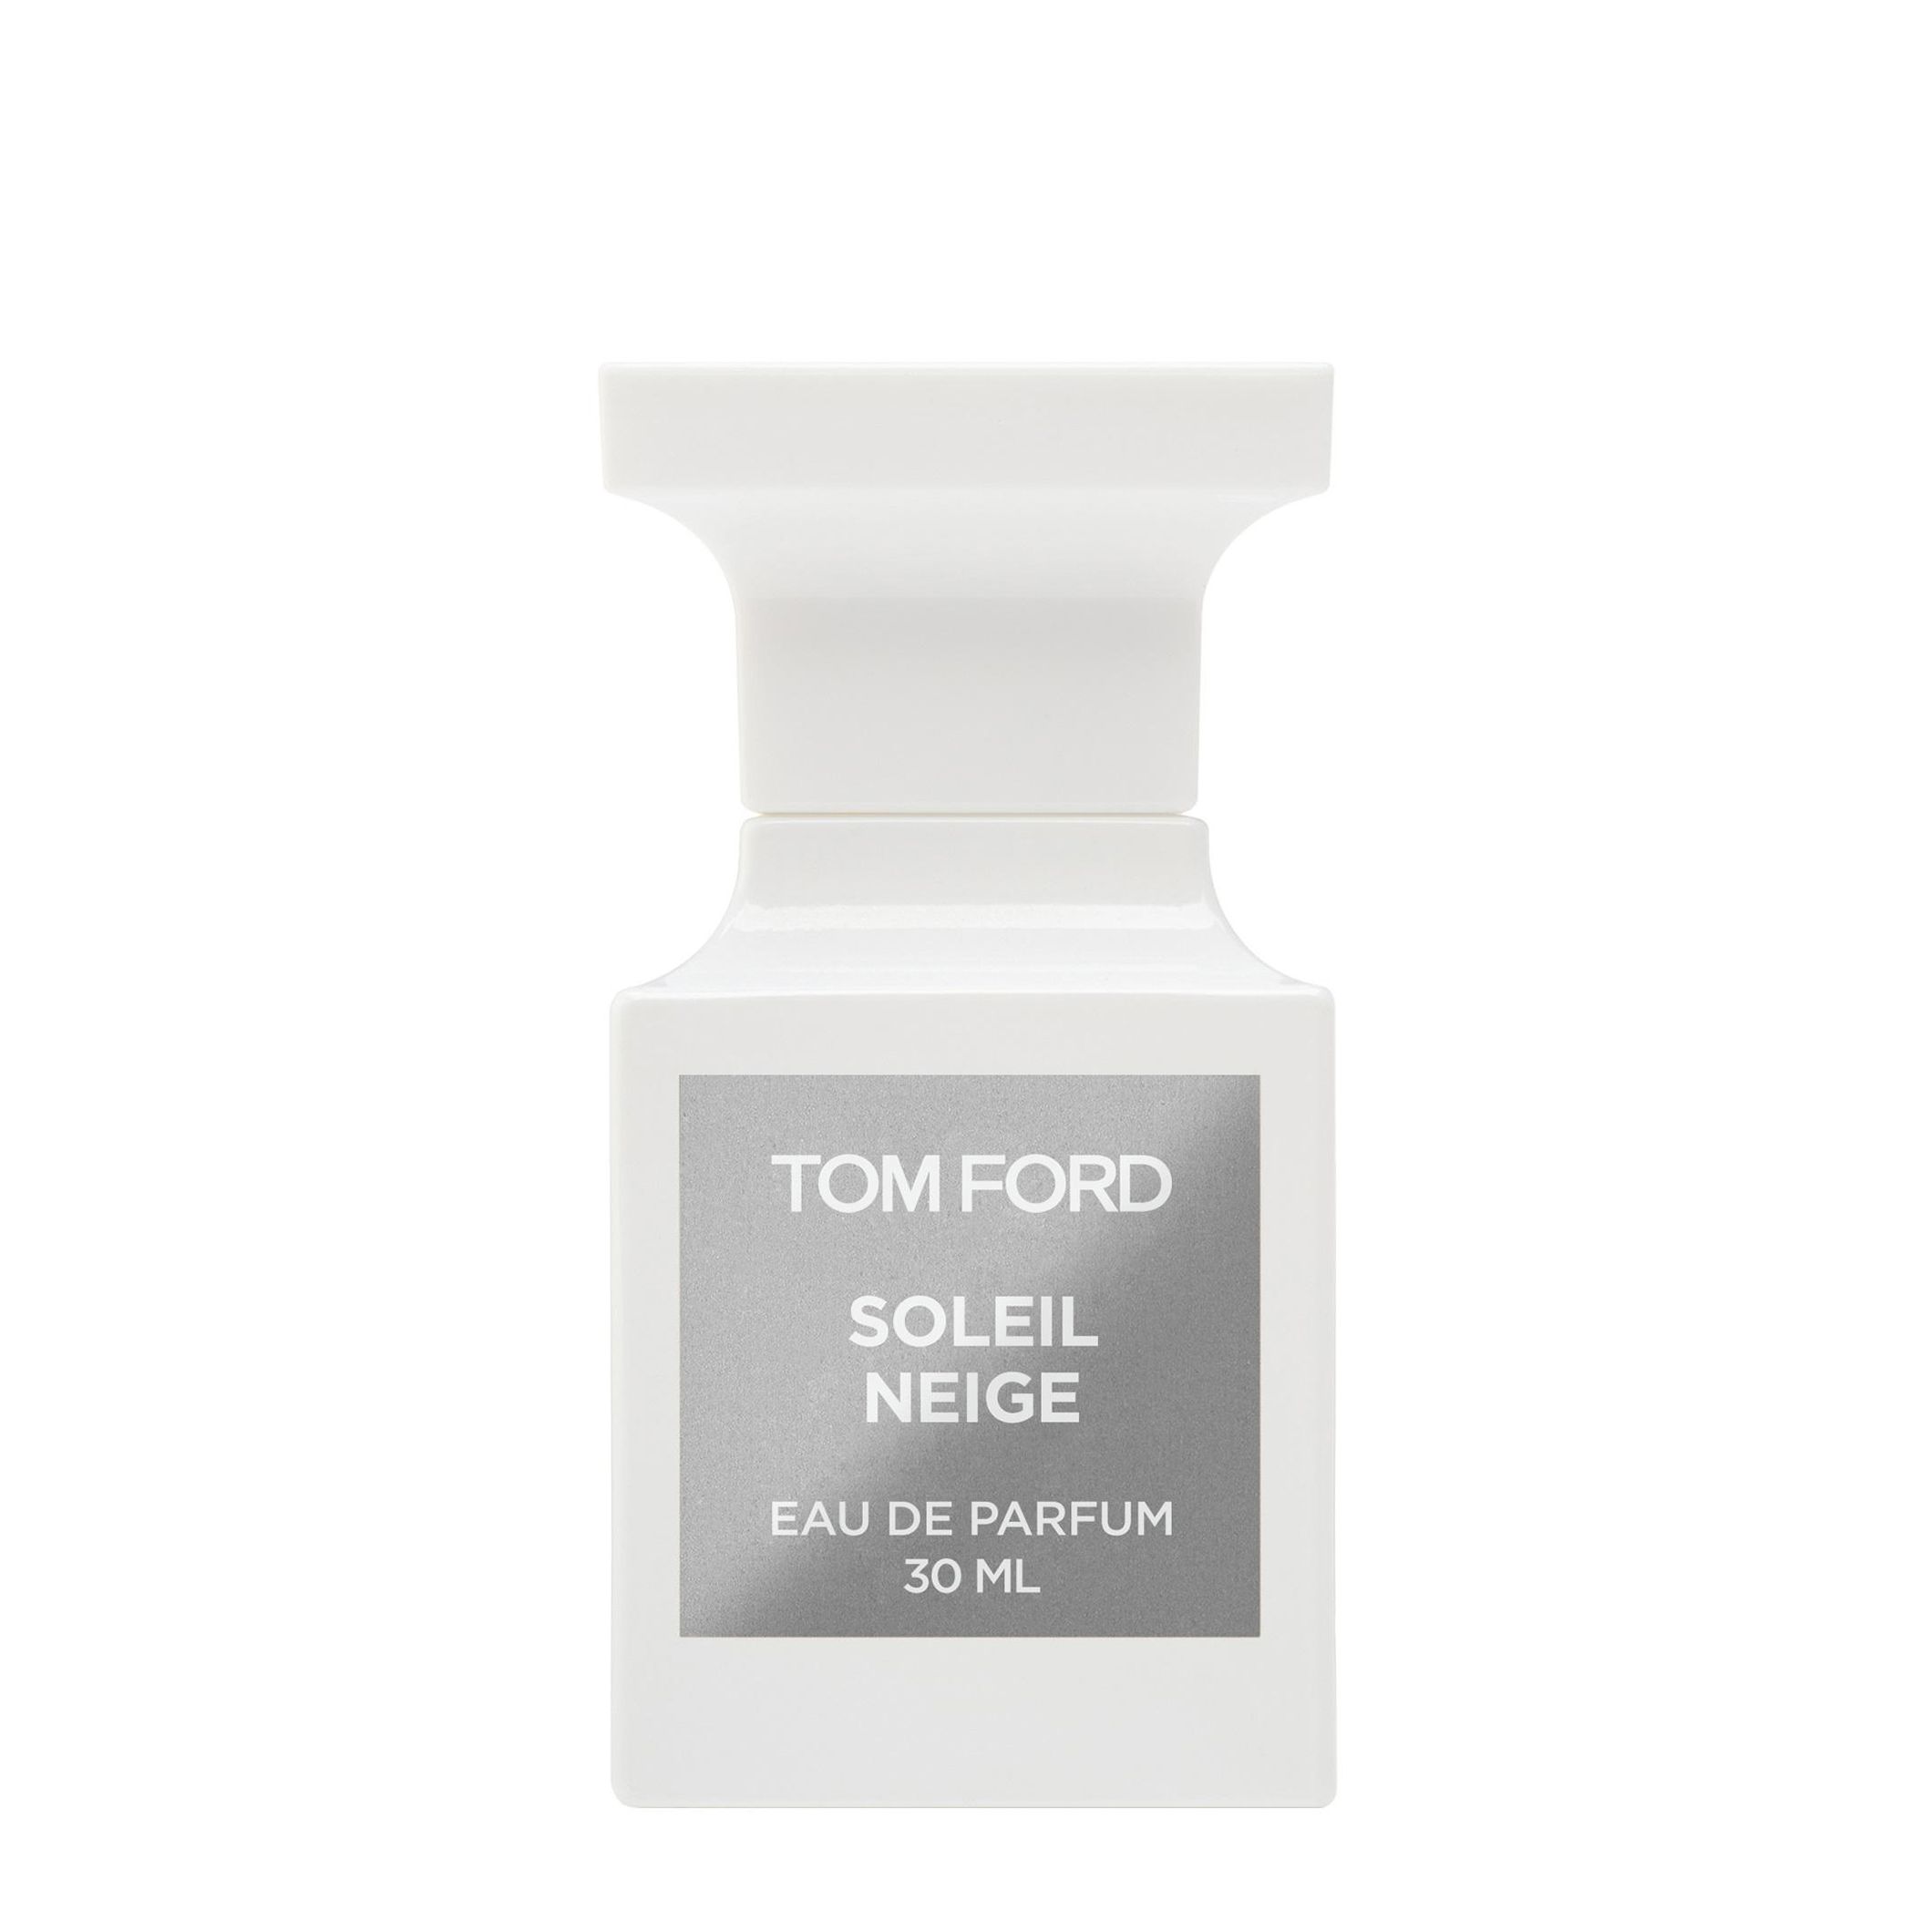 Вода парфюмерная Tom Ford Soleil Neige, унисекс, 30 мл tom ford спрей для тела soleil neige all over body spray